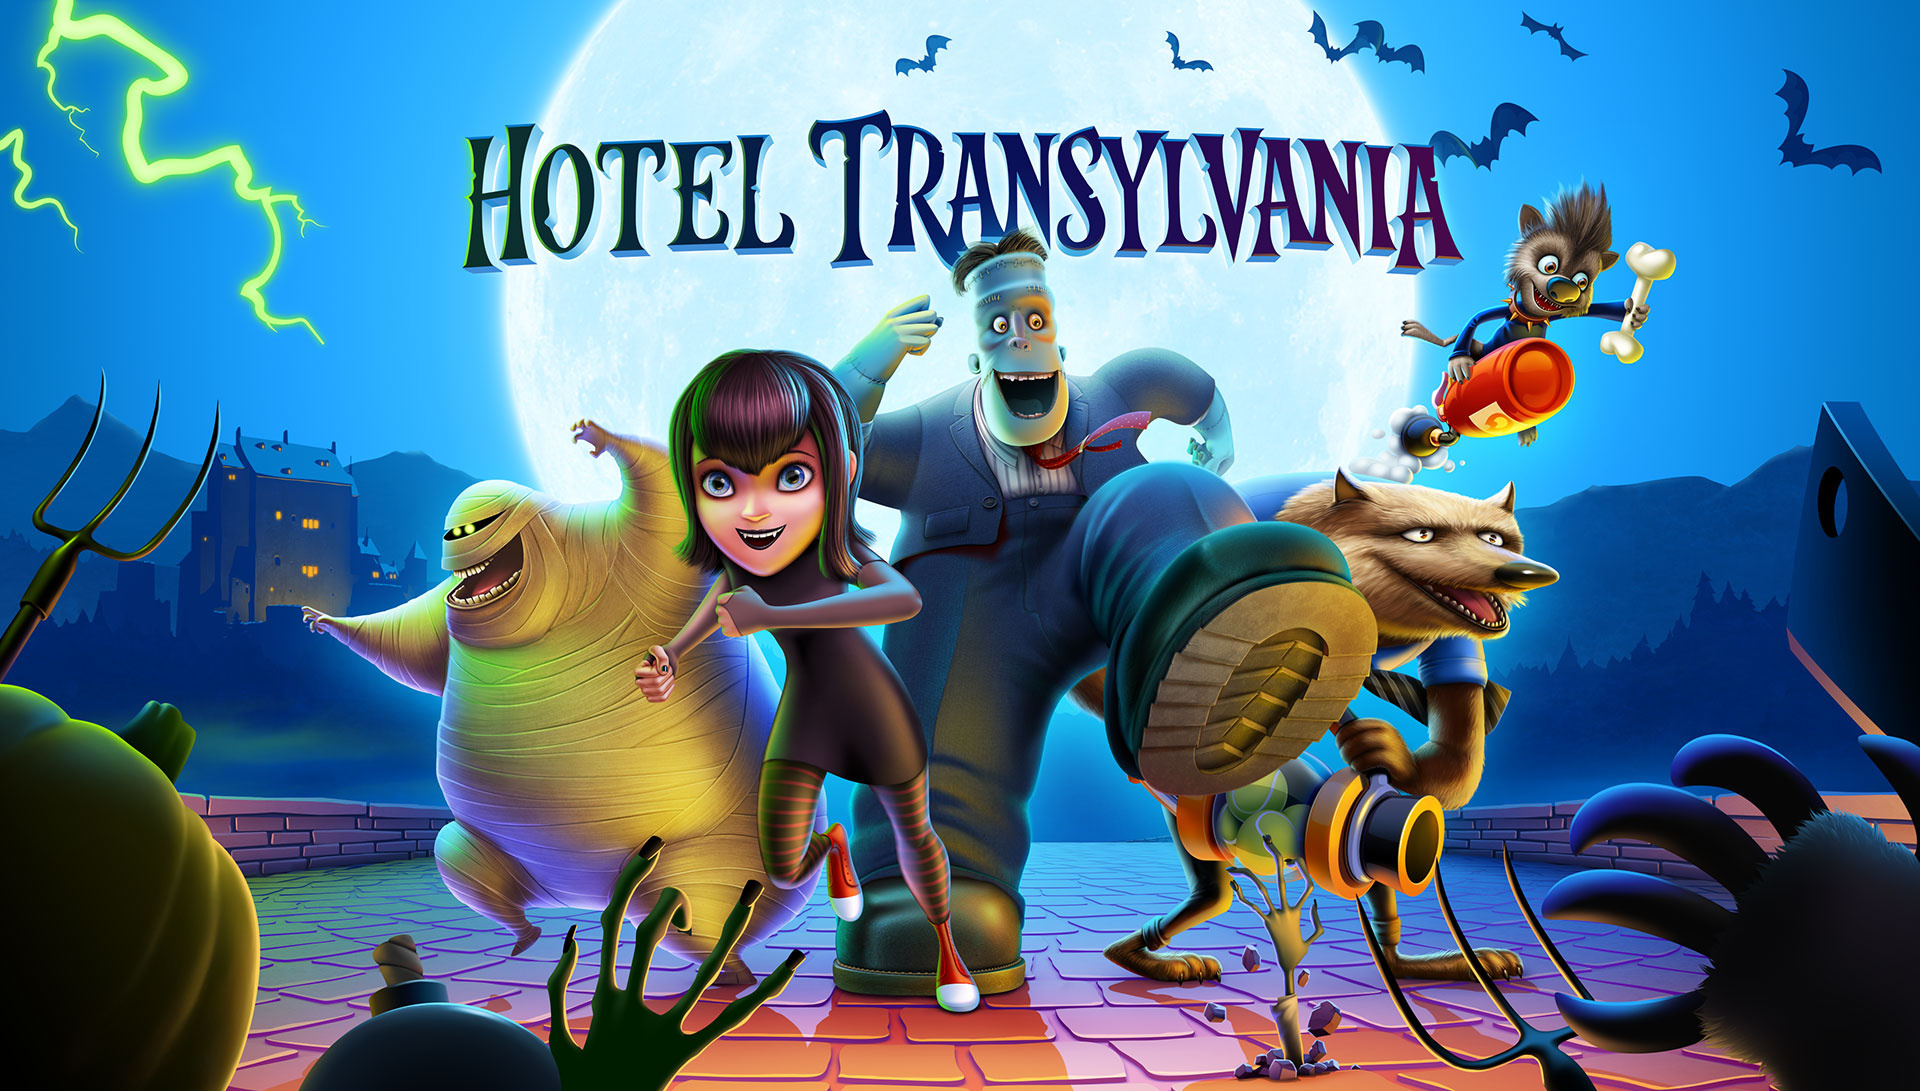 Hotel Transylvania 4, Movie release date, Exciting storyline, Pop culture phenomenon, 1920x1100 HD Desktop